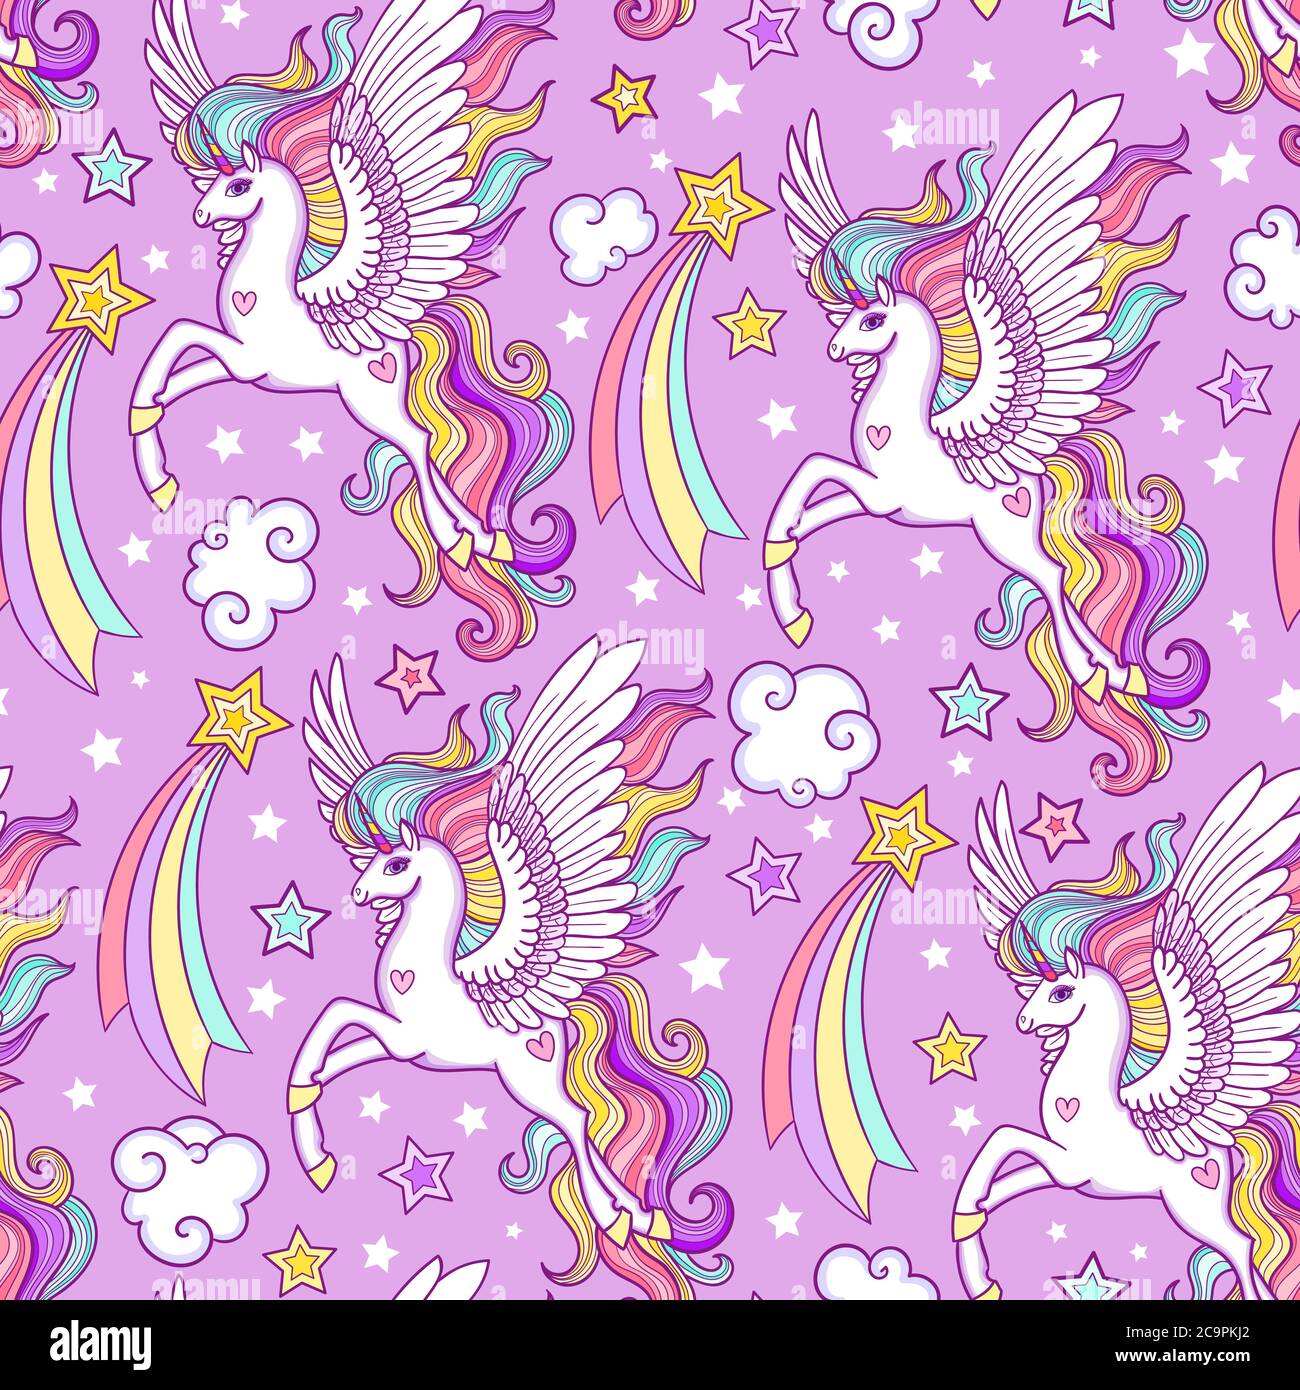 Seamless pattern with white unicorns, stars, hearts. For children's design of wallpaper, fabric, etc. Vector illustration Stock Vector